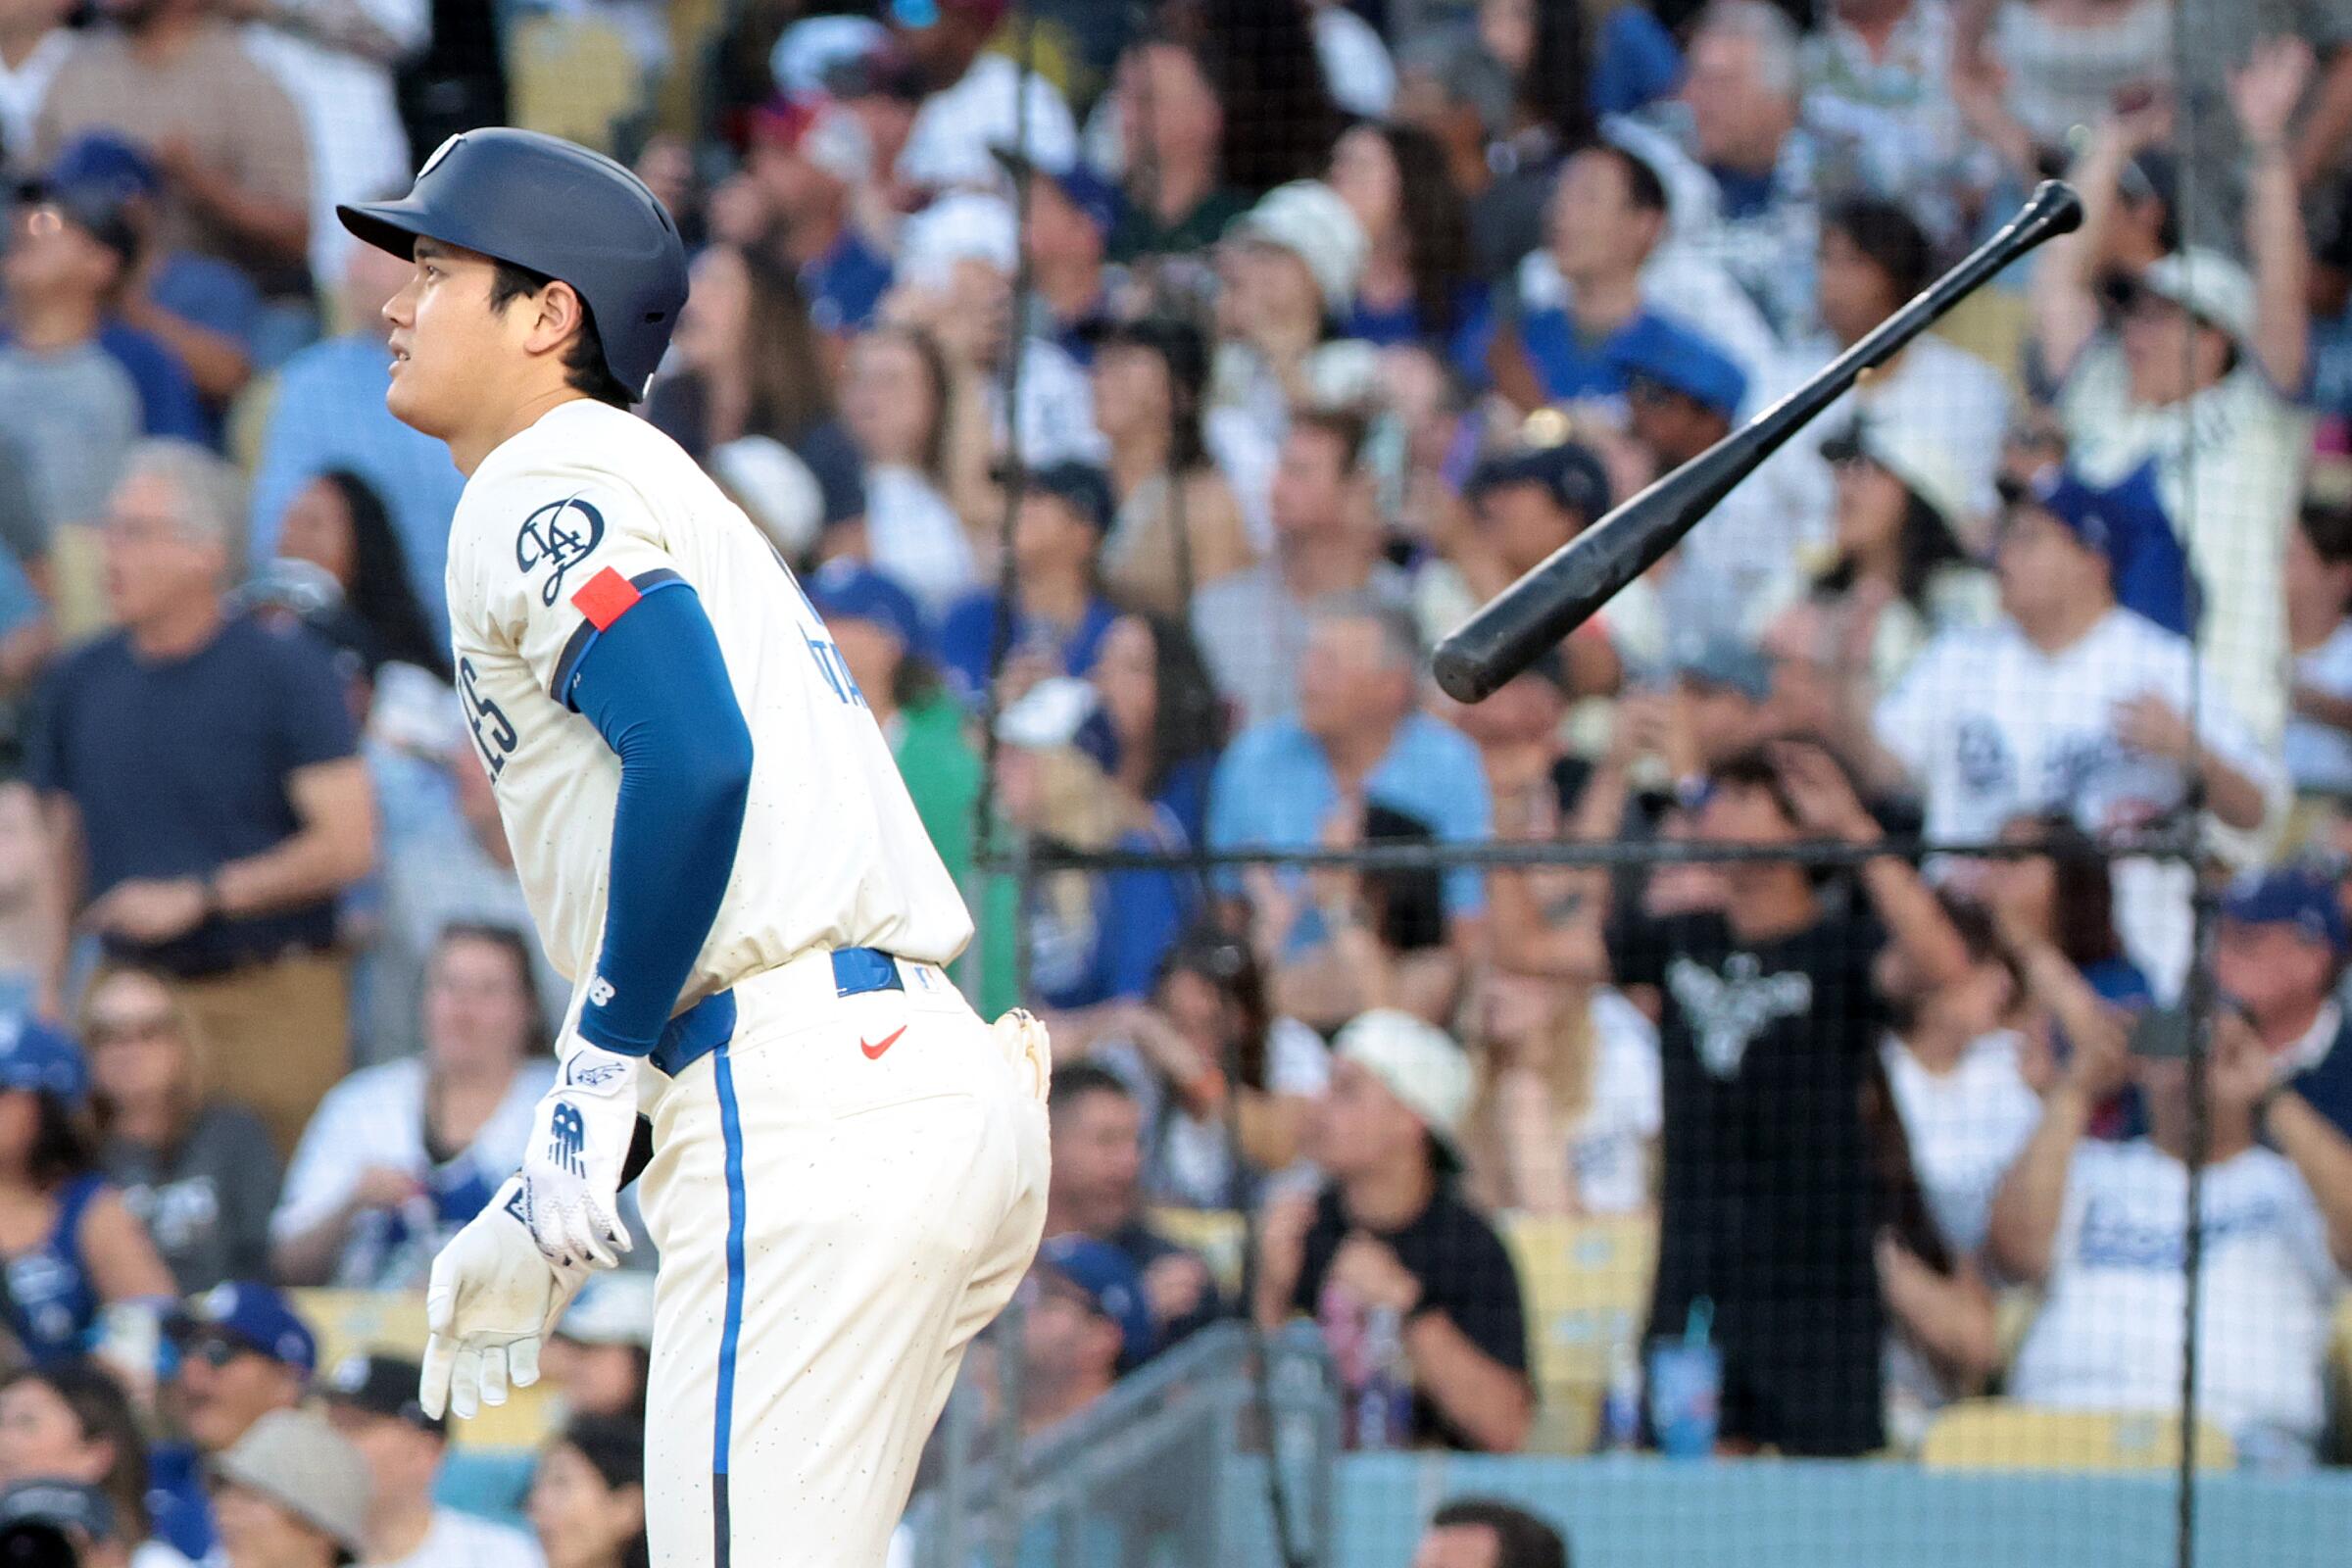 Shohei Ohtani tosses his bat after hitting a home run.